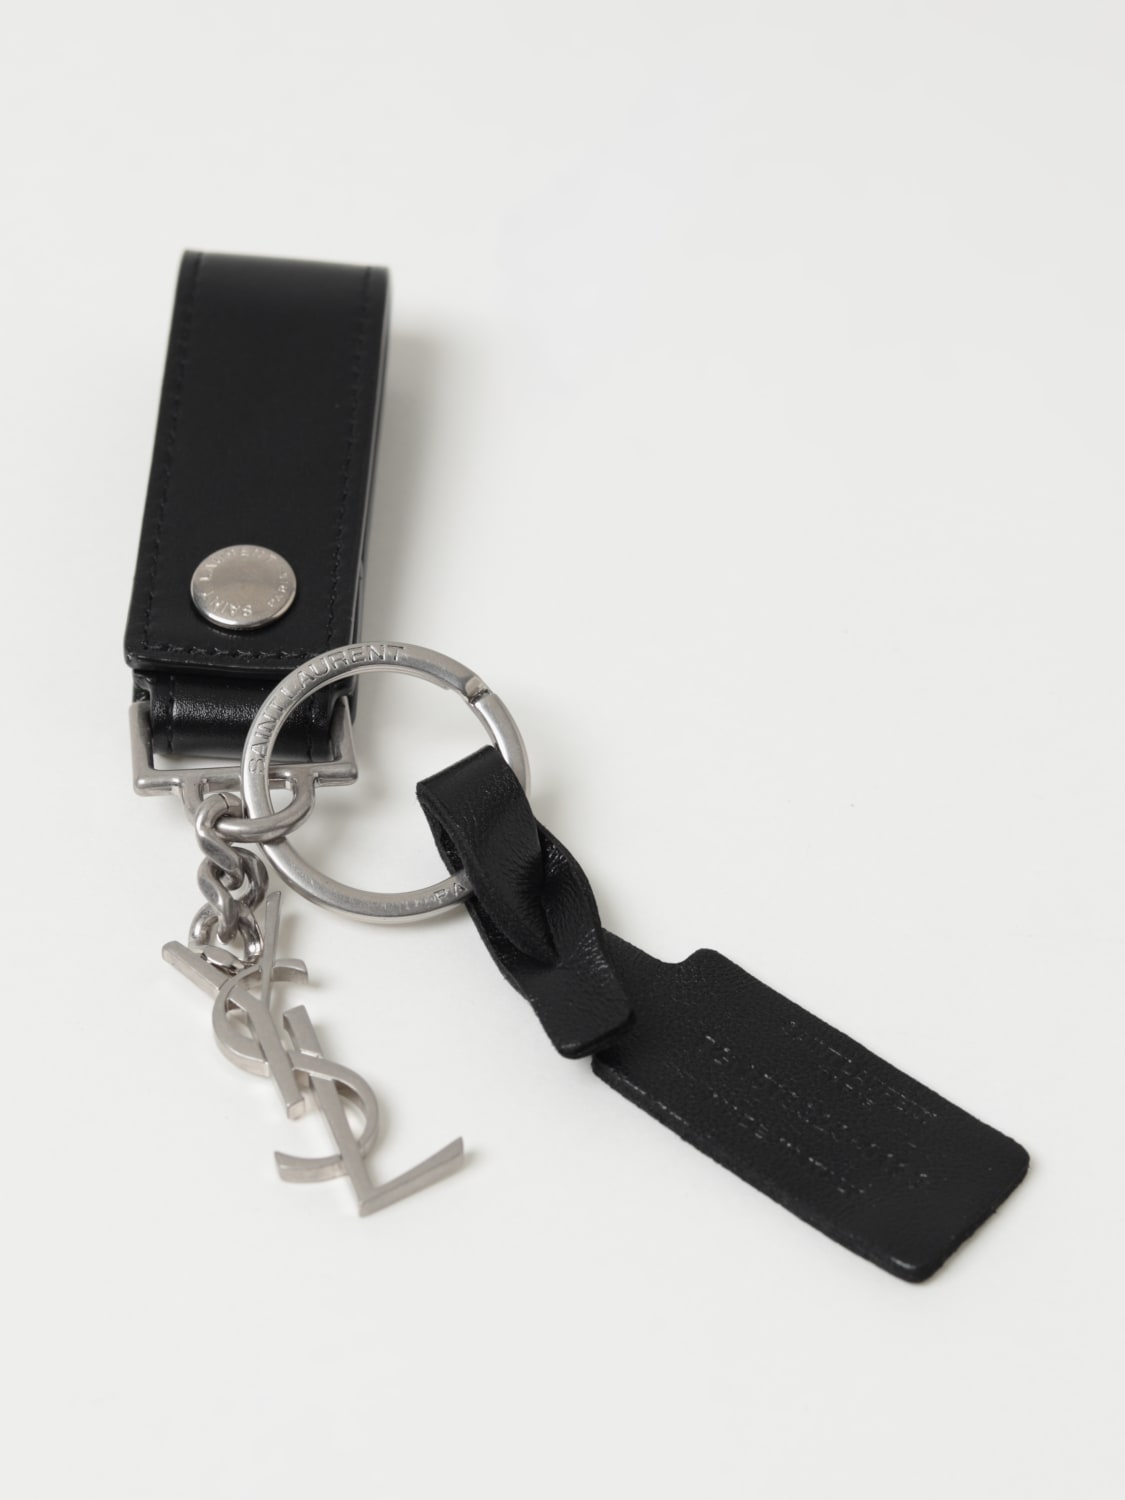 Logo Leather Keychain in Black - Saint Laurent